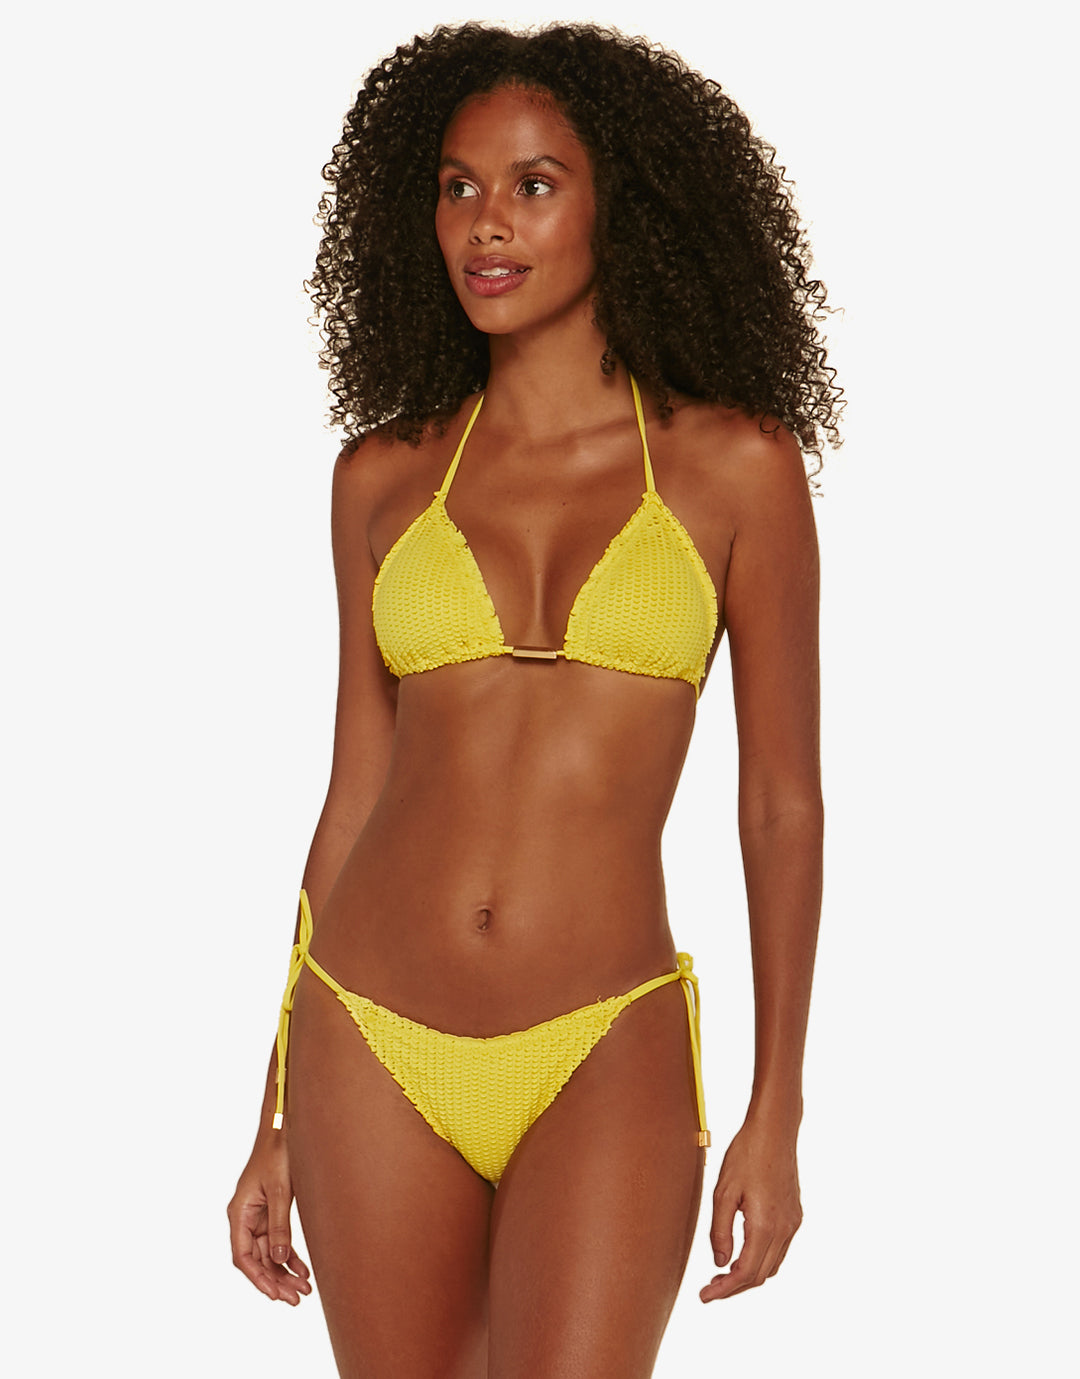 Light Scales Ripple Tri Bikini Top - Yellow - Simply Beach UK